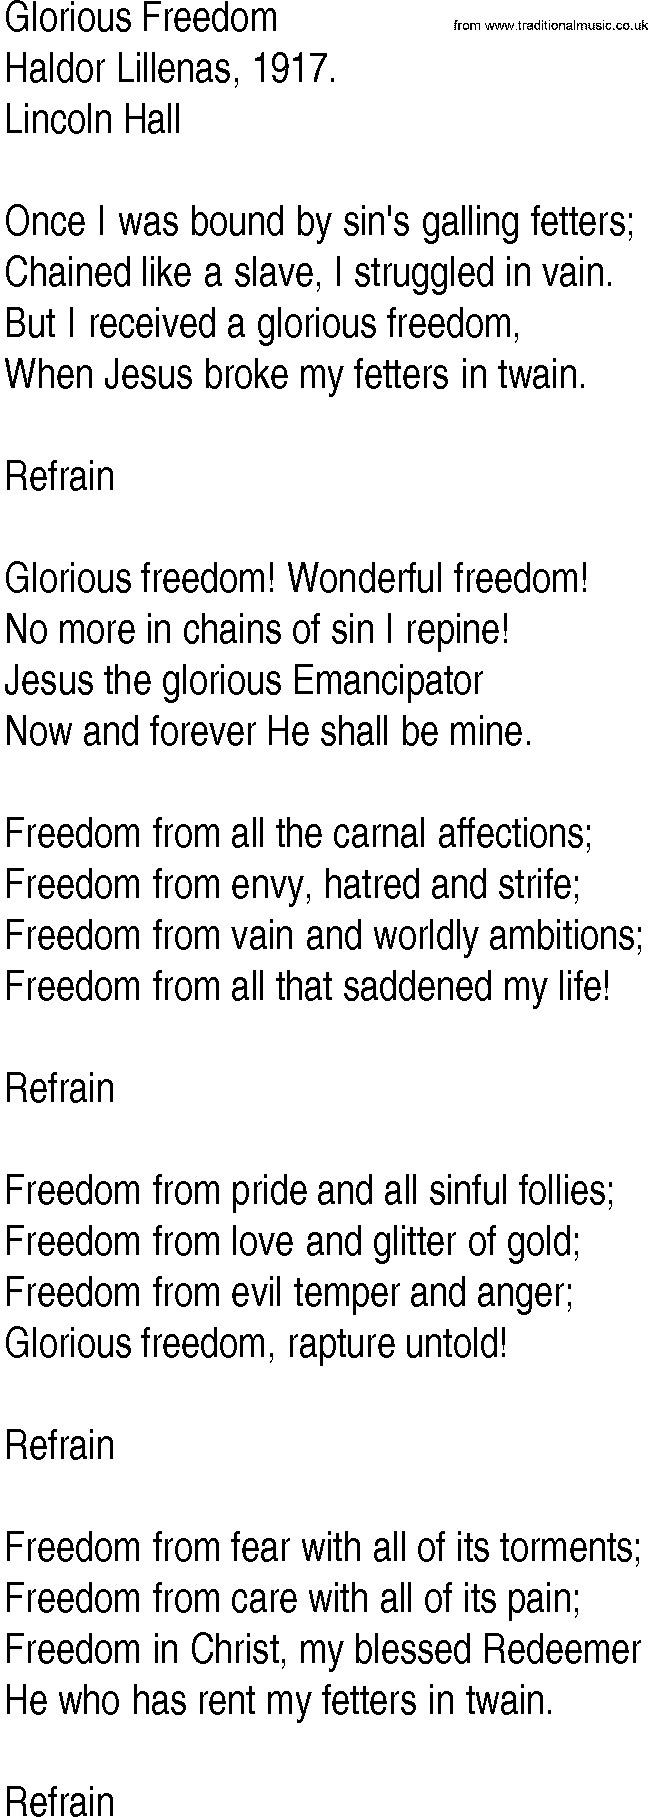 Hymn and Gospel Song: Glorious Freedom by Haldor Lillenas lyrics